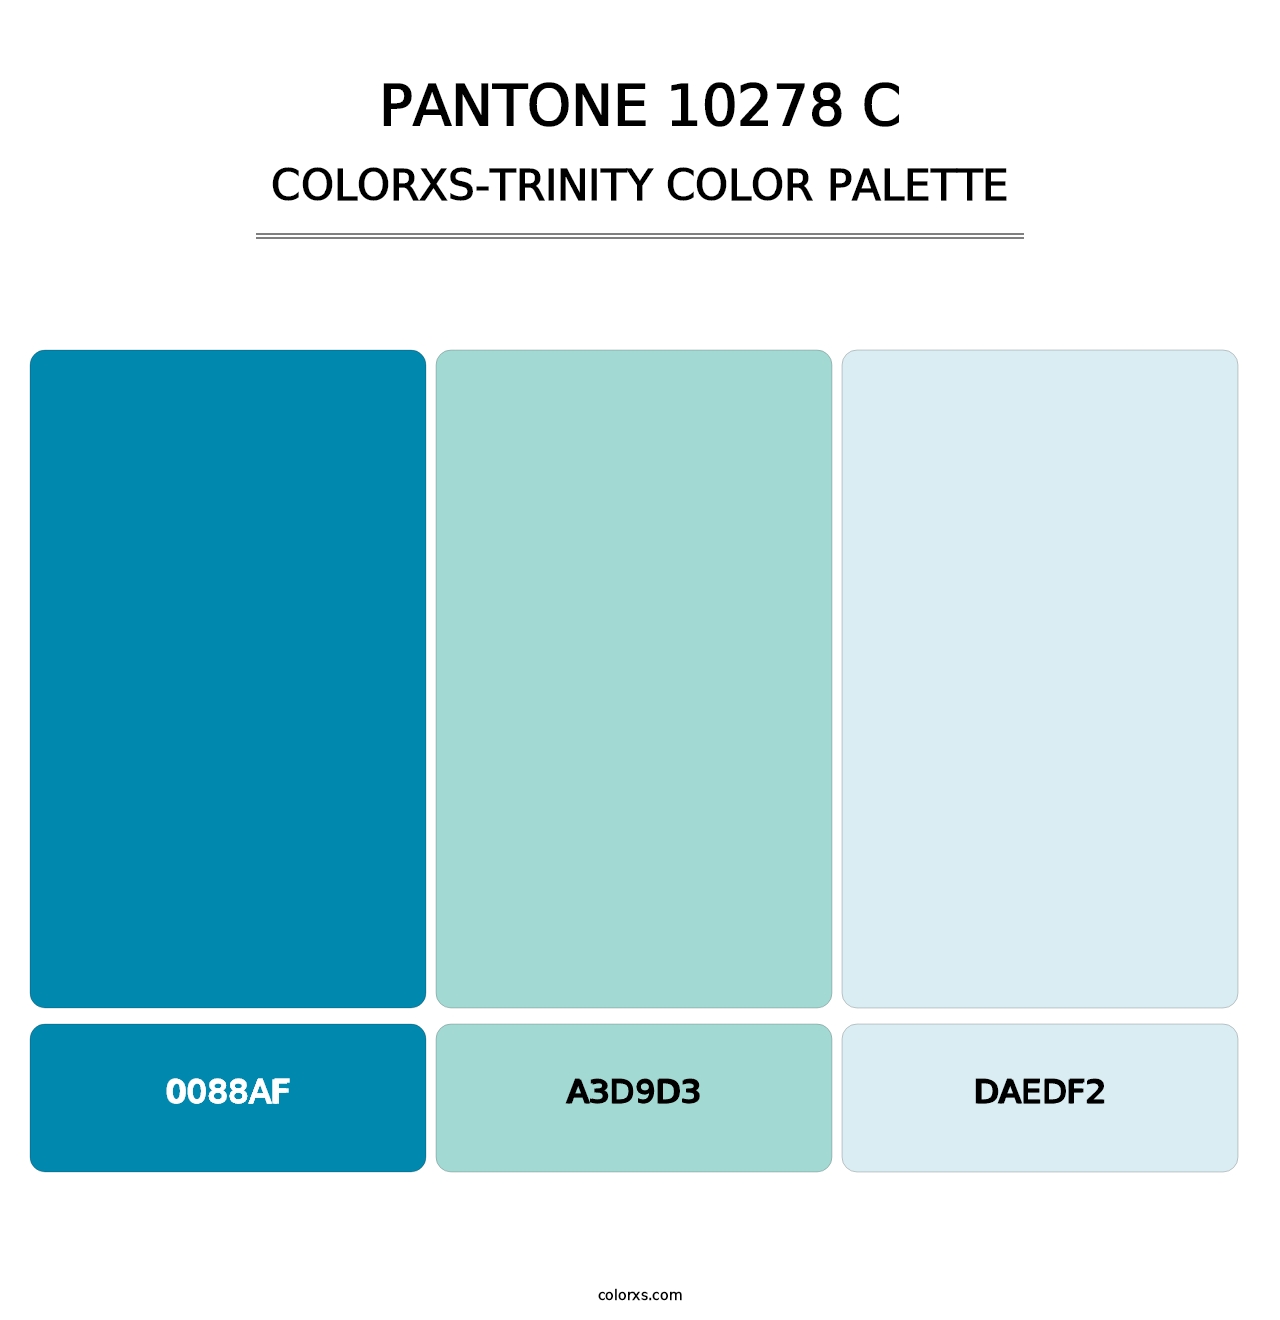 PANTONE 10278 C - Colorxs Trinity Palette